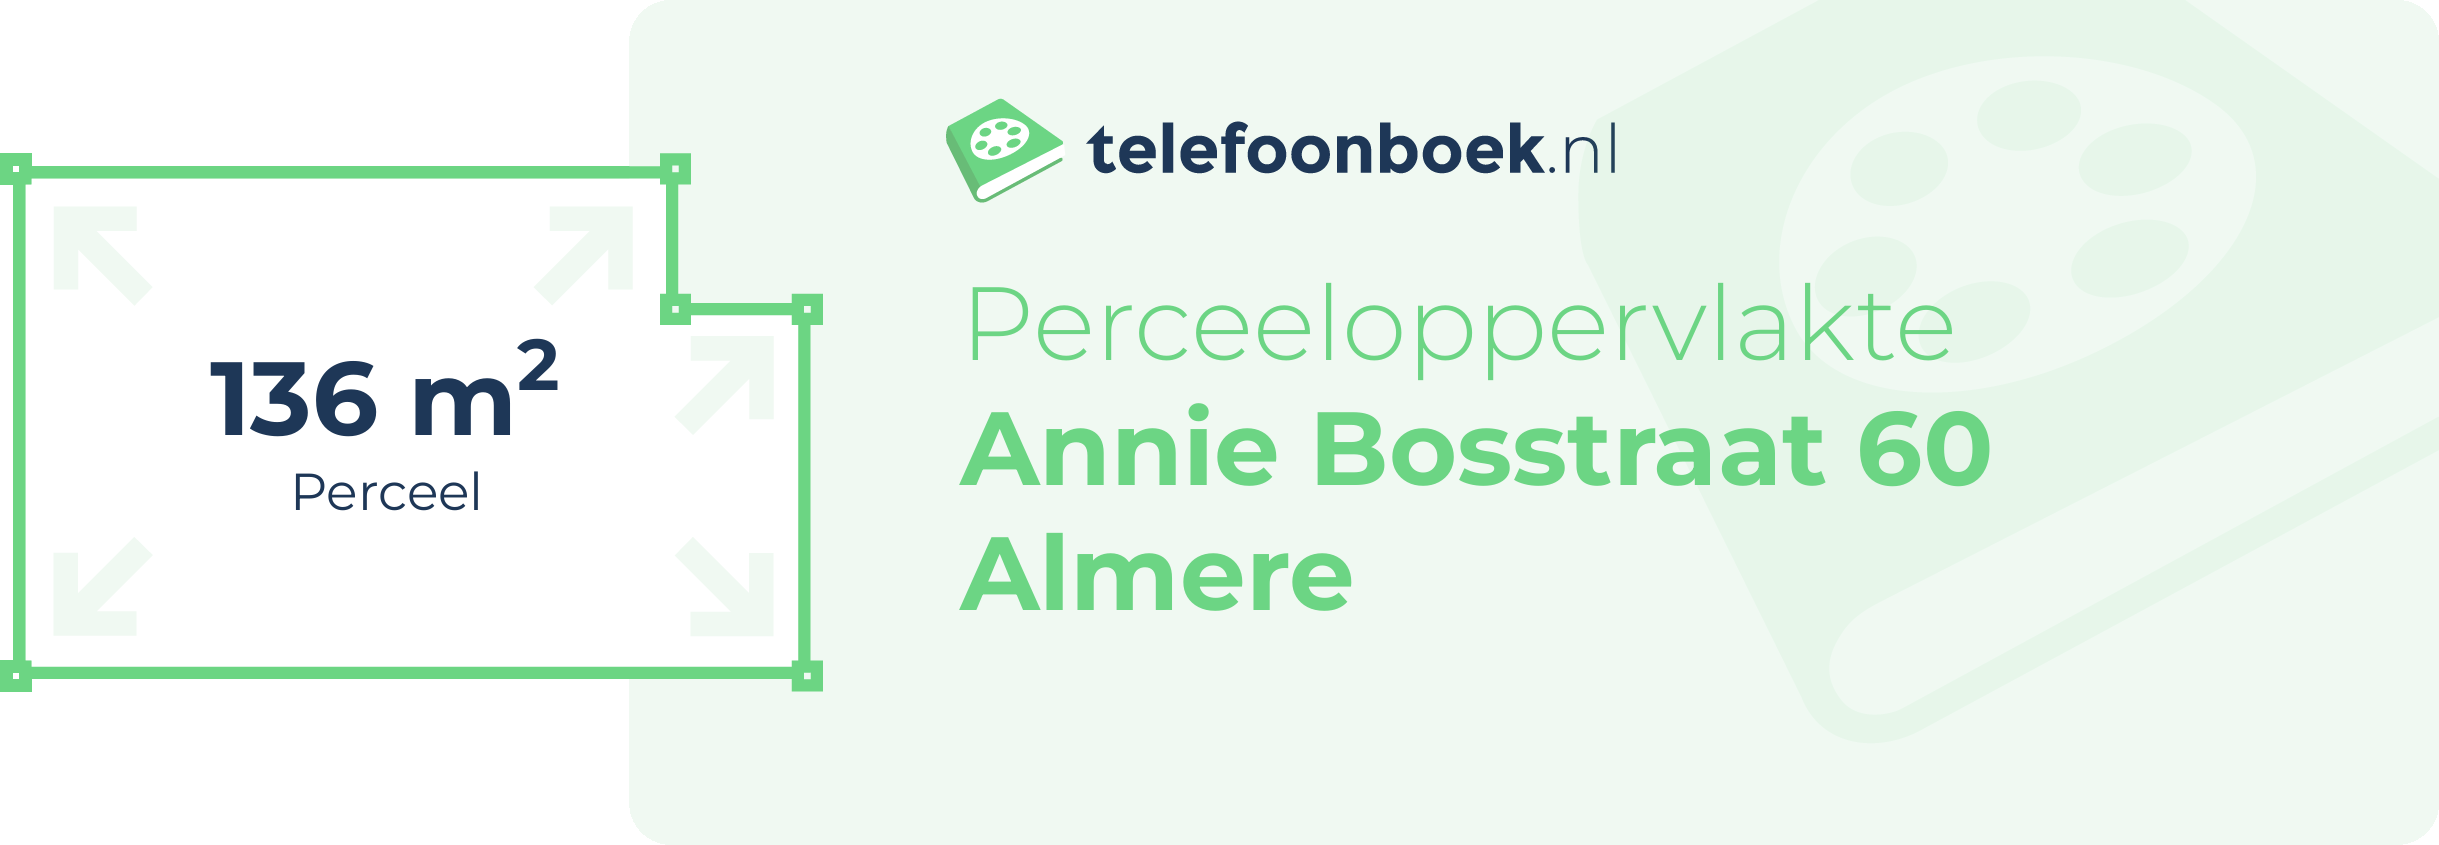 Perceeloppervlakte Annie Bosstraat 60 Almere